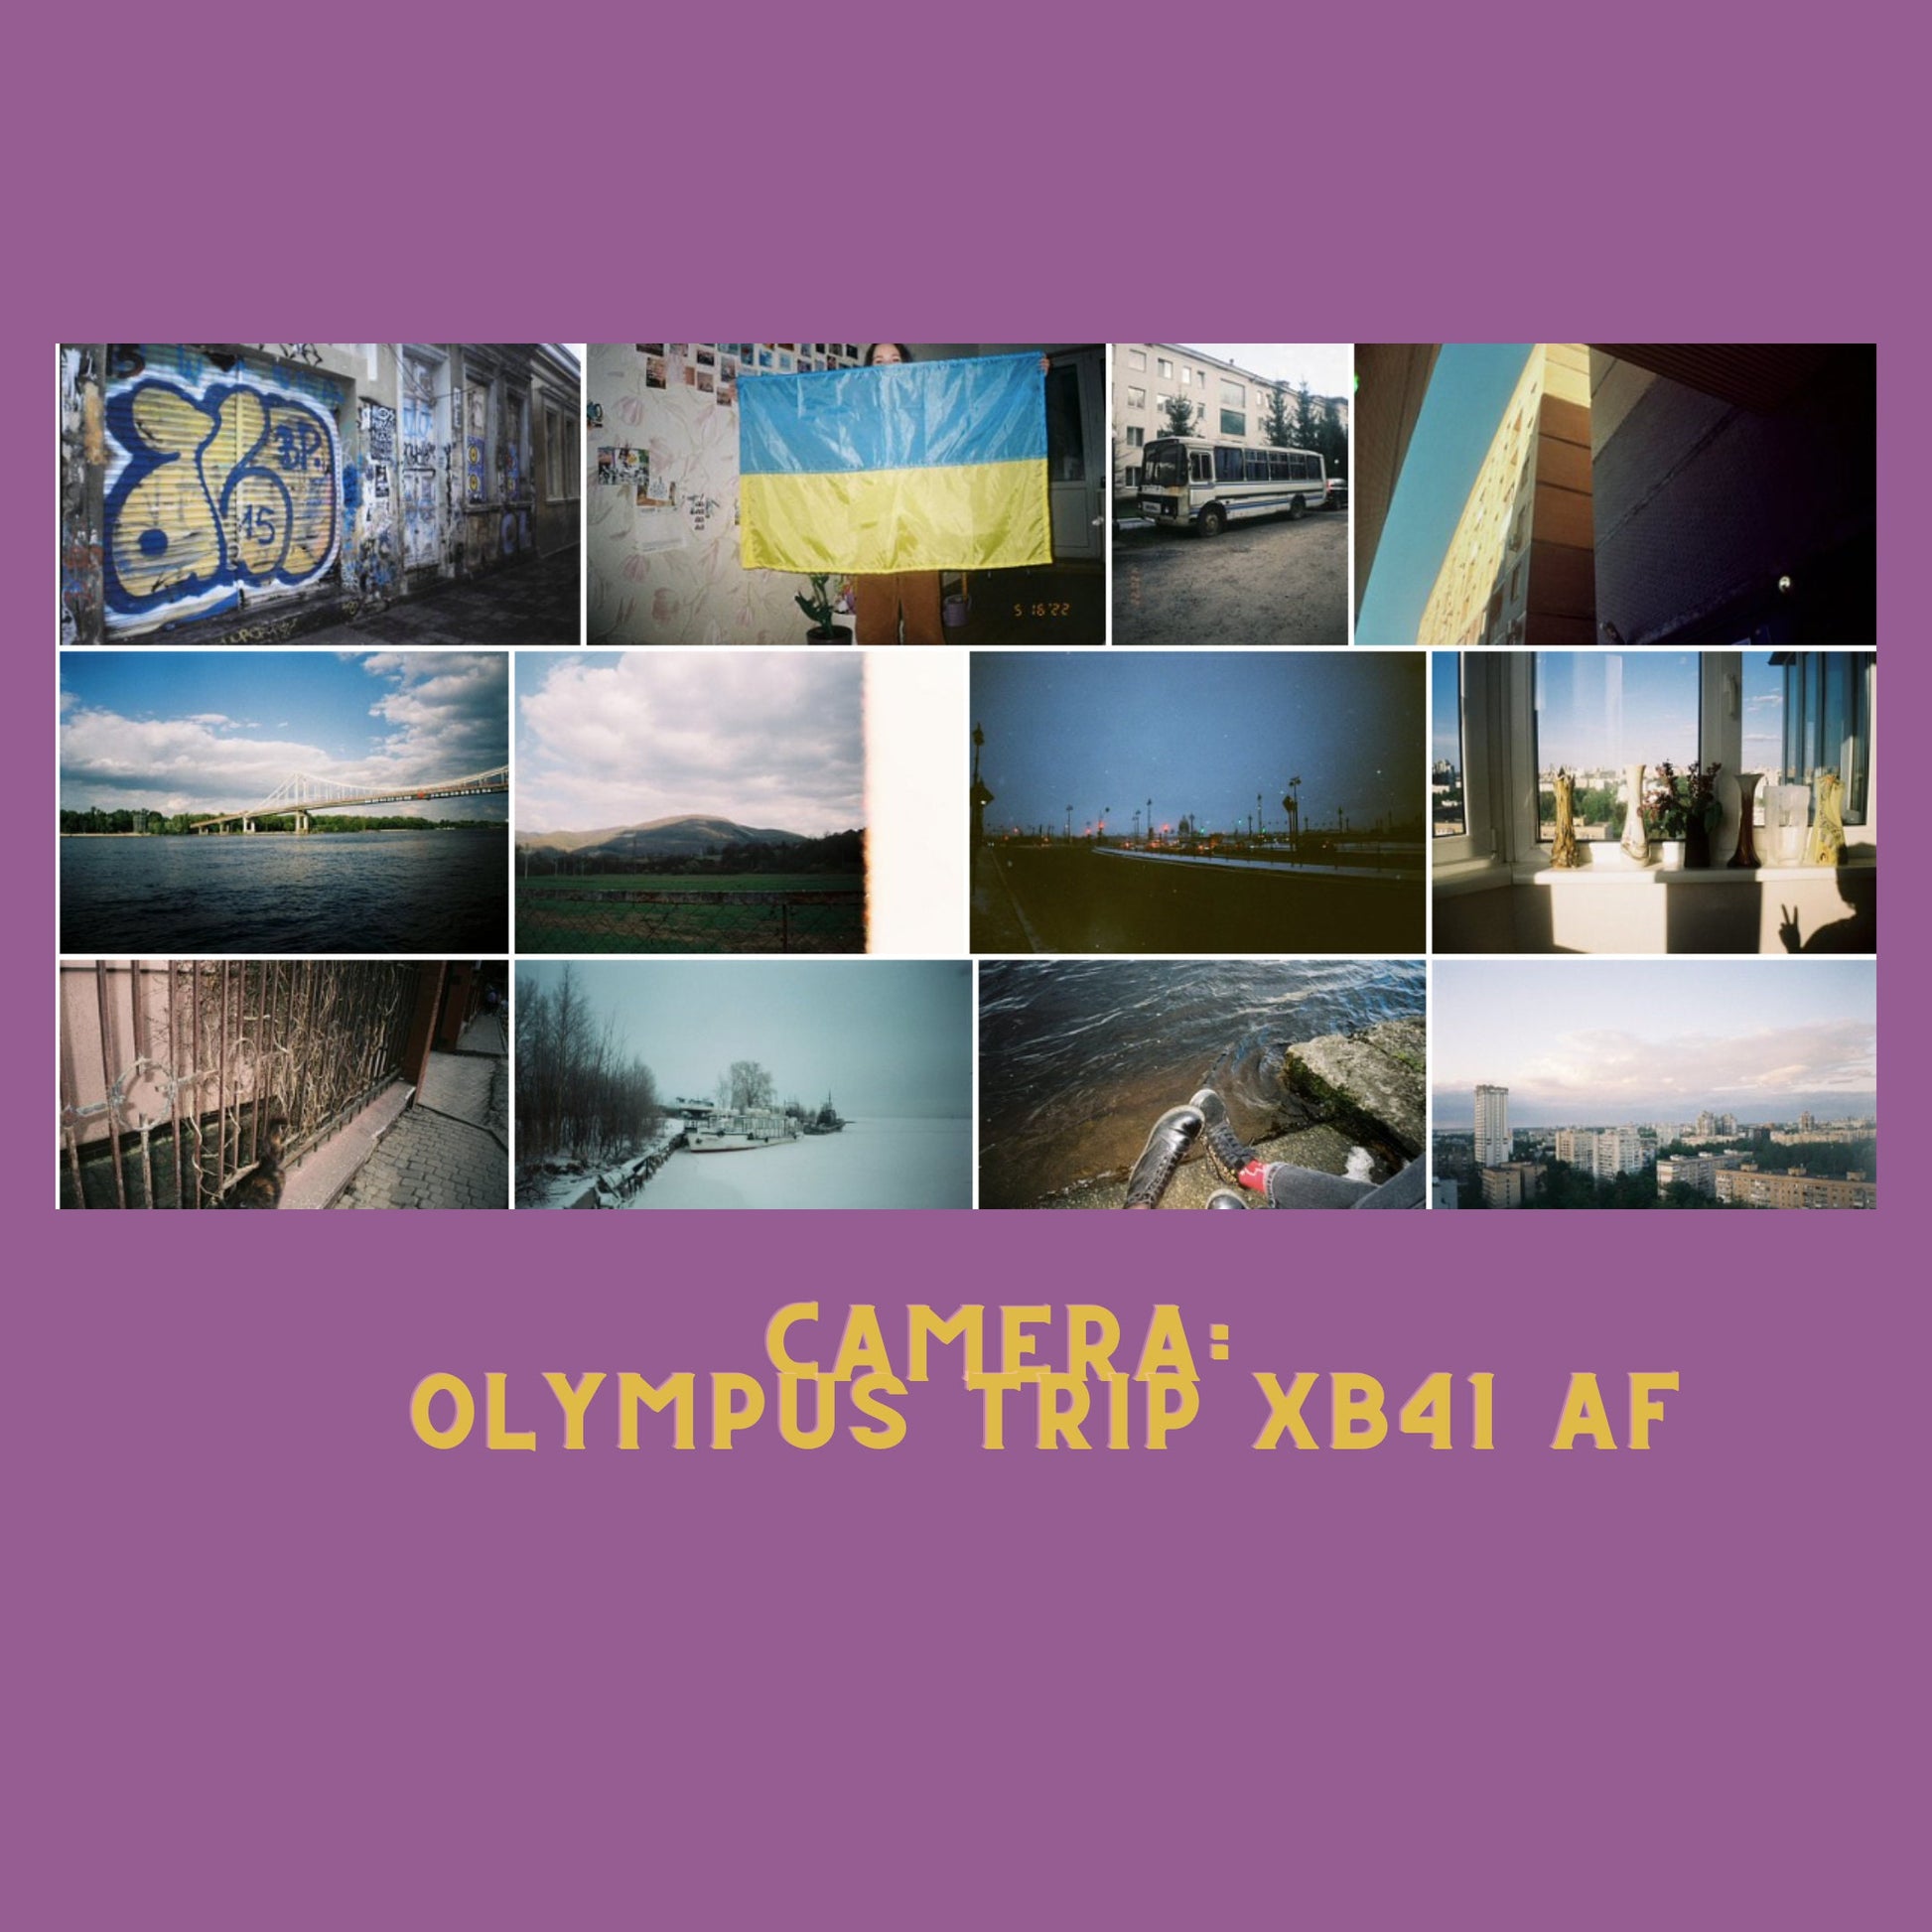 NEW ARRIVAL!! Olympus trip XB41AF, Working Film Camera, Vintage Camera - Vintage Polaroid Instant Cameras